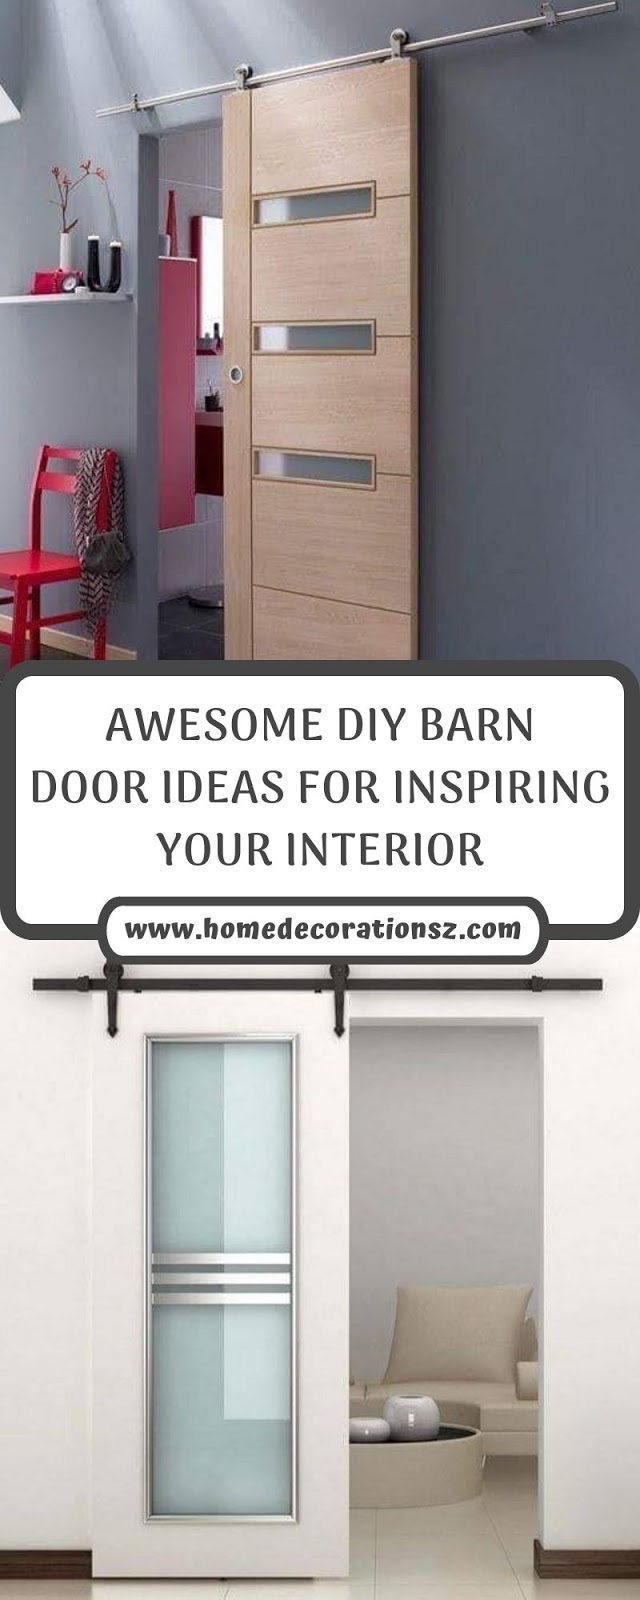 AWESOME DIY BARN DOOR IDEAS FOR INSPIRING YOUR INTERIOR